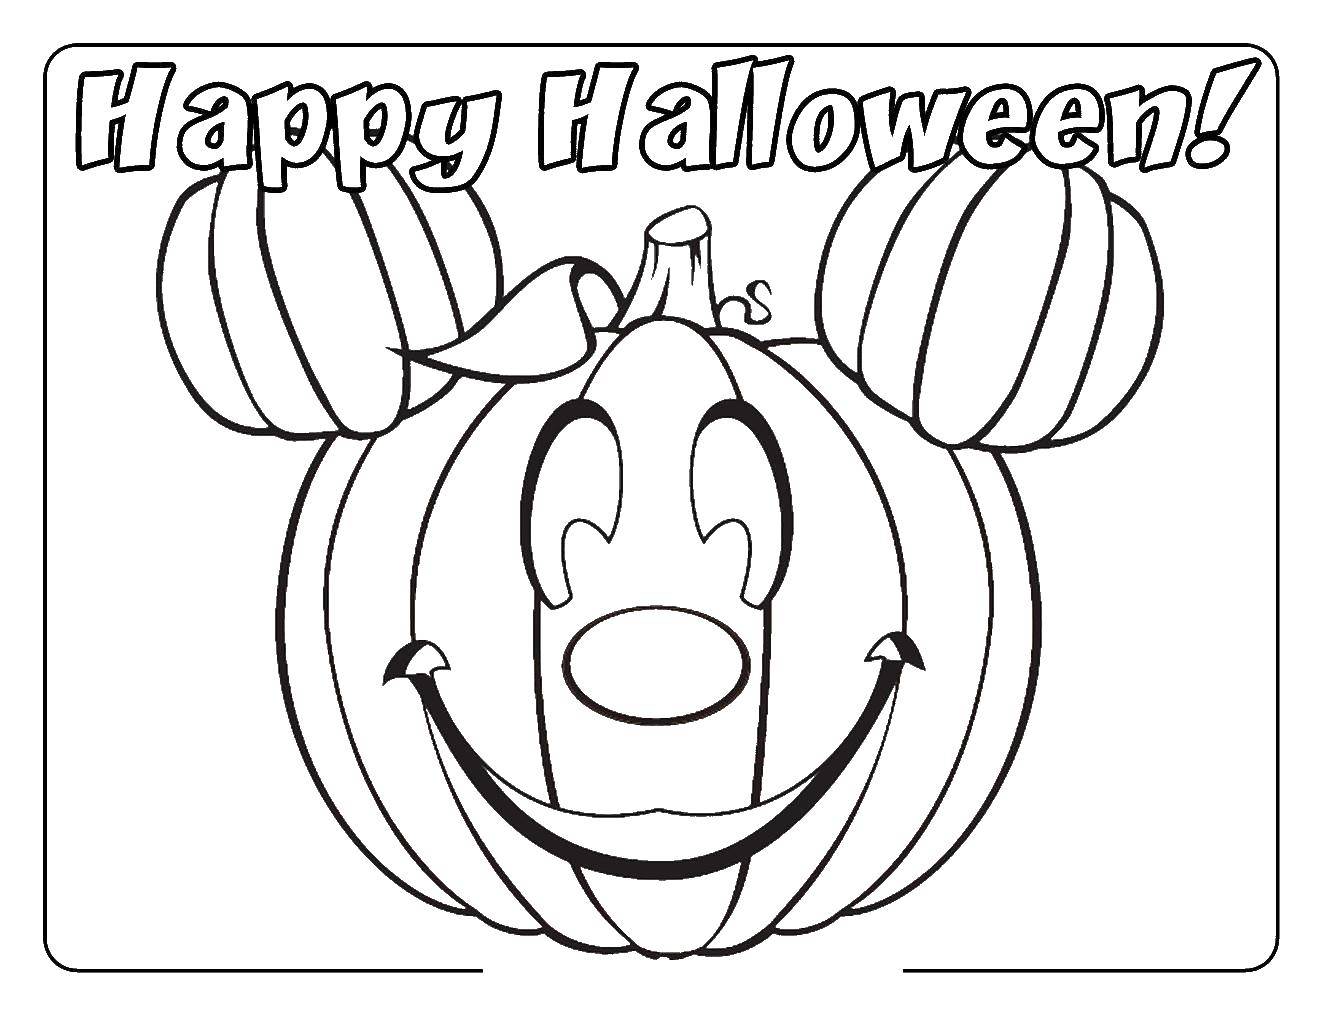 Coloring Mickey pumpkin on Halloween. Category Halloween. Tags:  Mickymaus, Halloween.